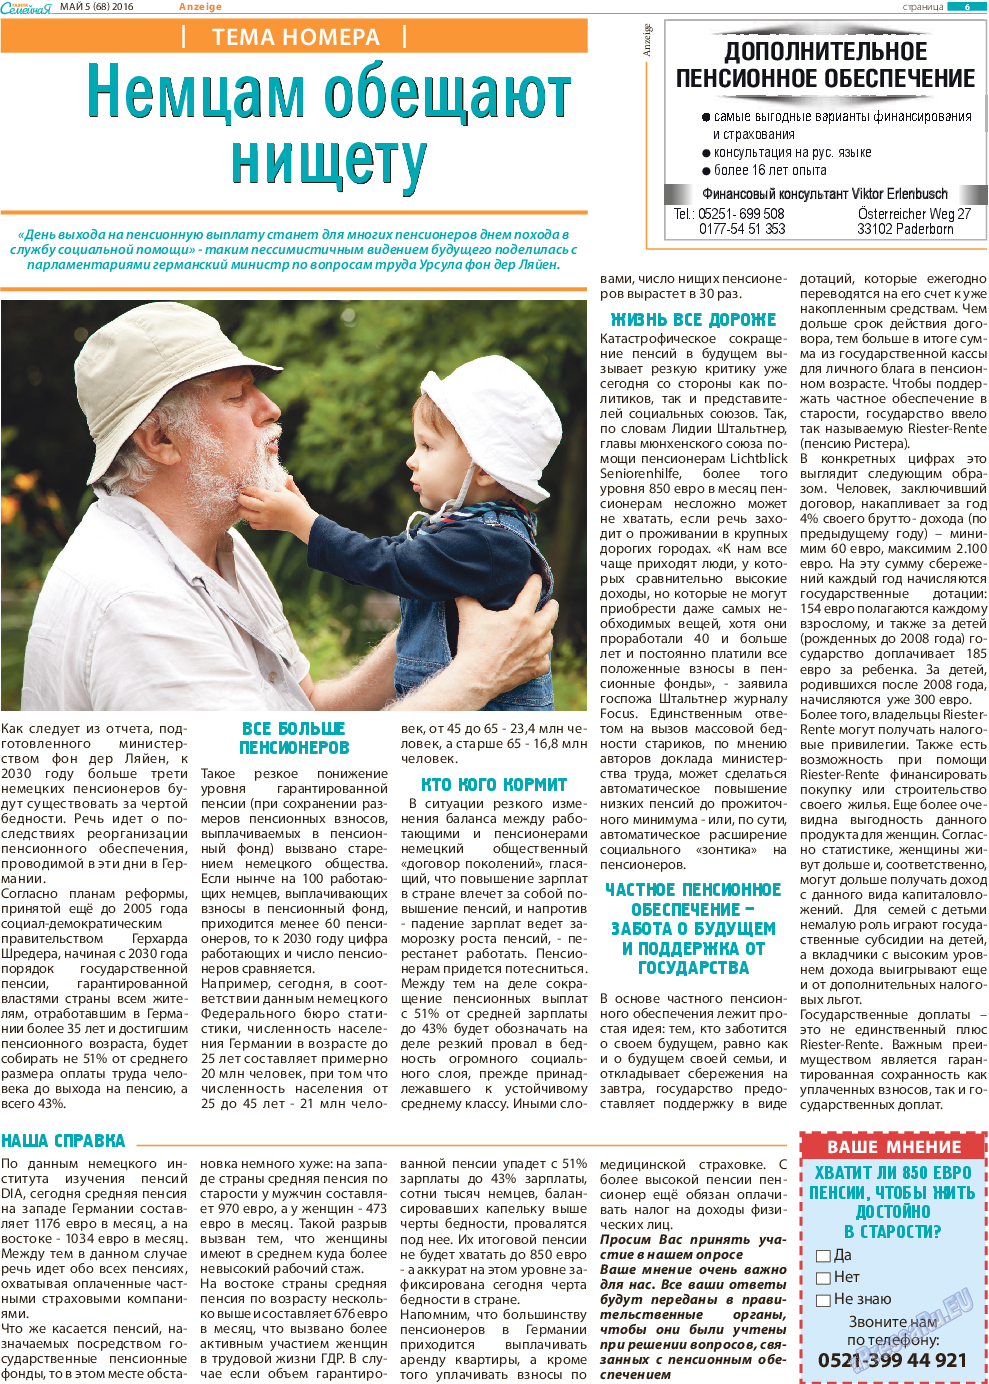 Семейная газета, газета. 2016 №5 стр.6